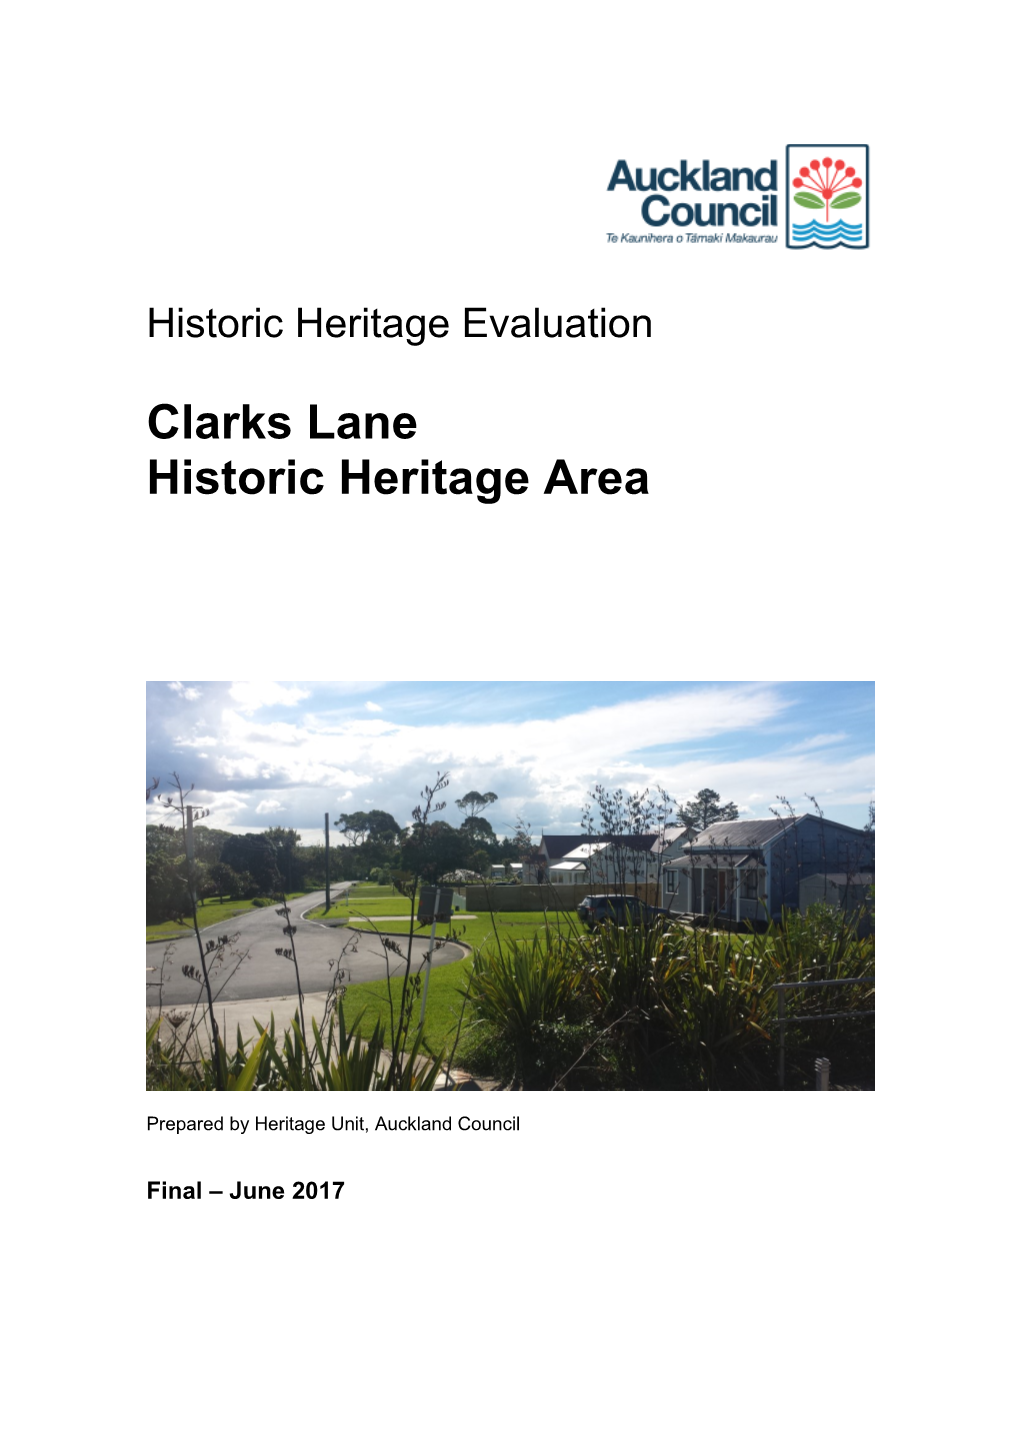 Clarks Lane Historic Heritage Area